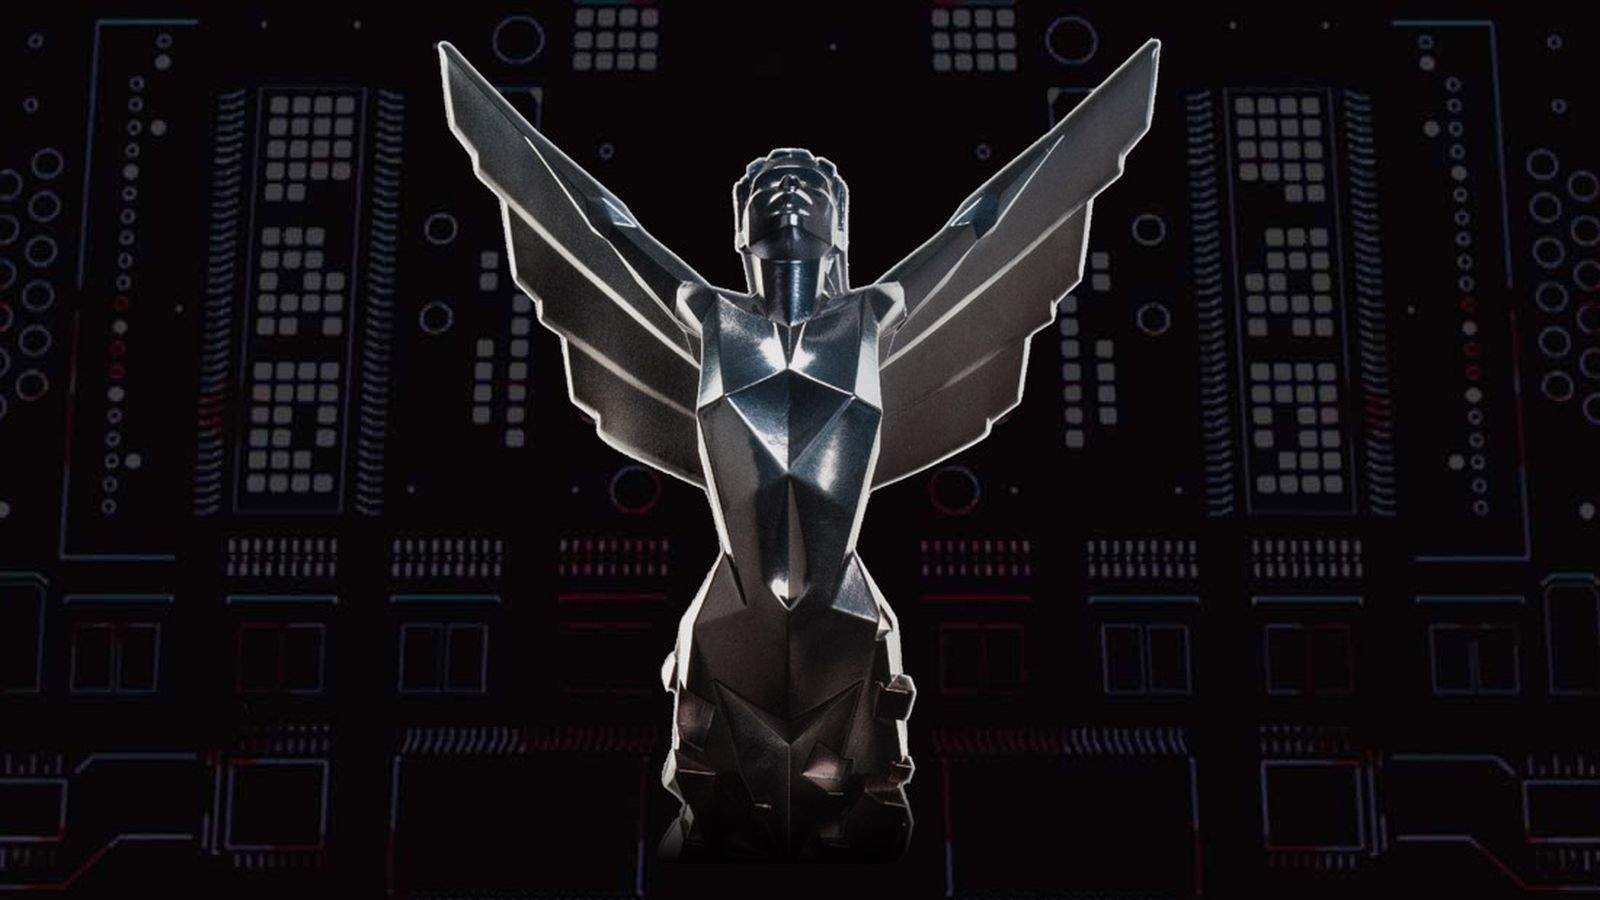 The Game Awards 2017 GOTY nominees include: Wolfenstein 2, Horizon